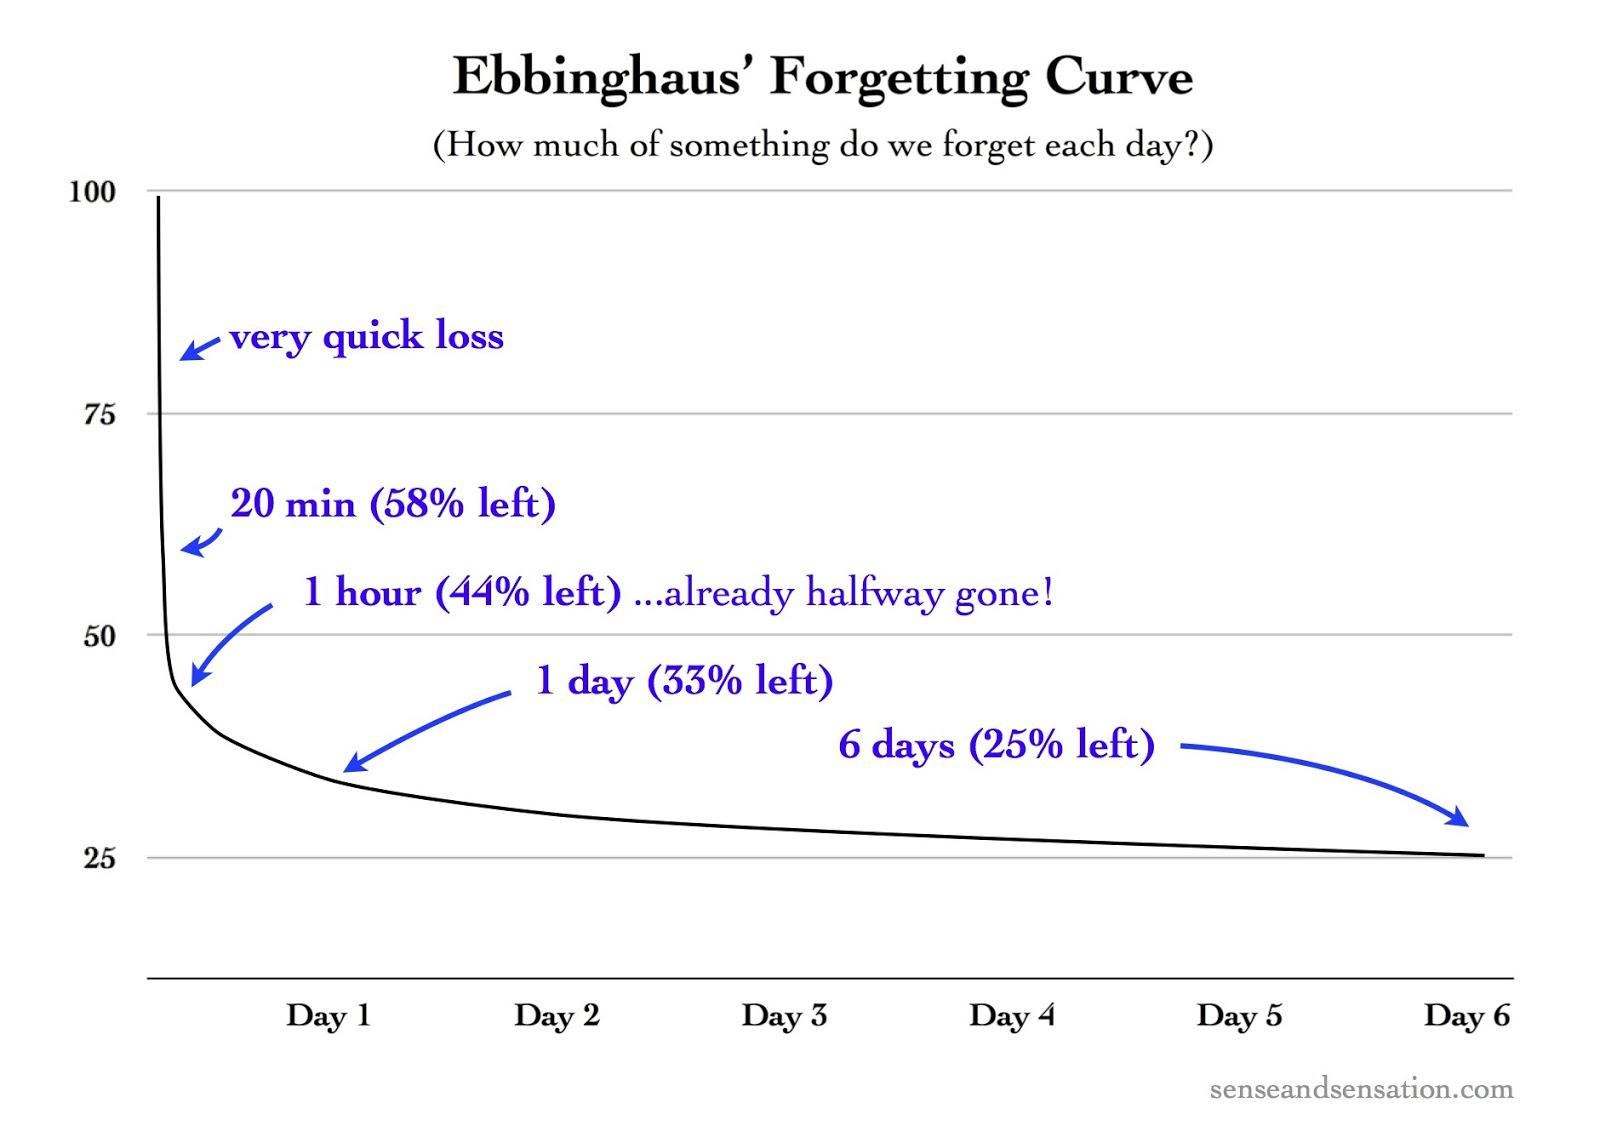 Curva de esquecimento de Ebbinghaus